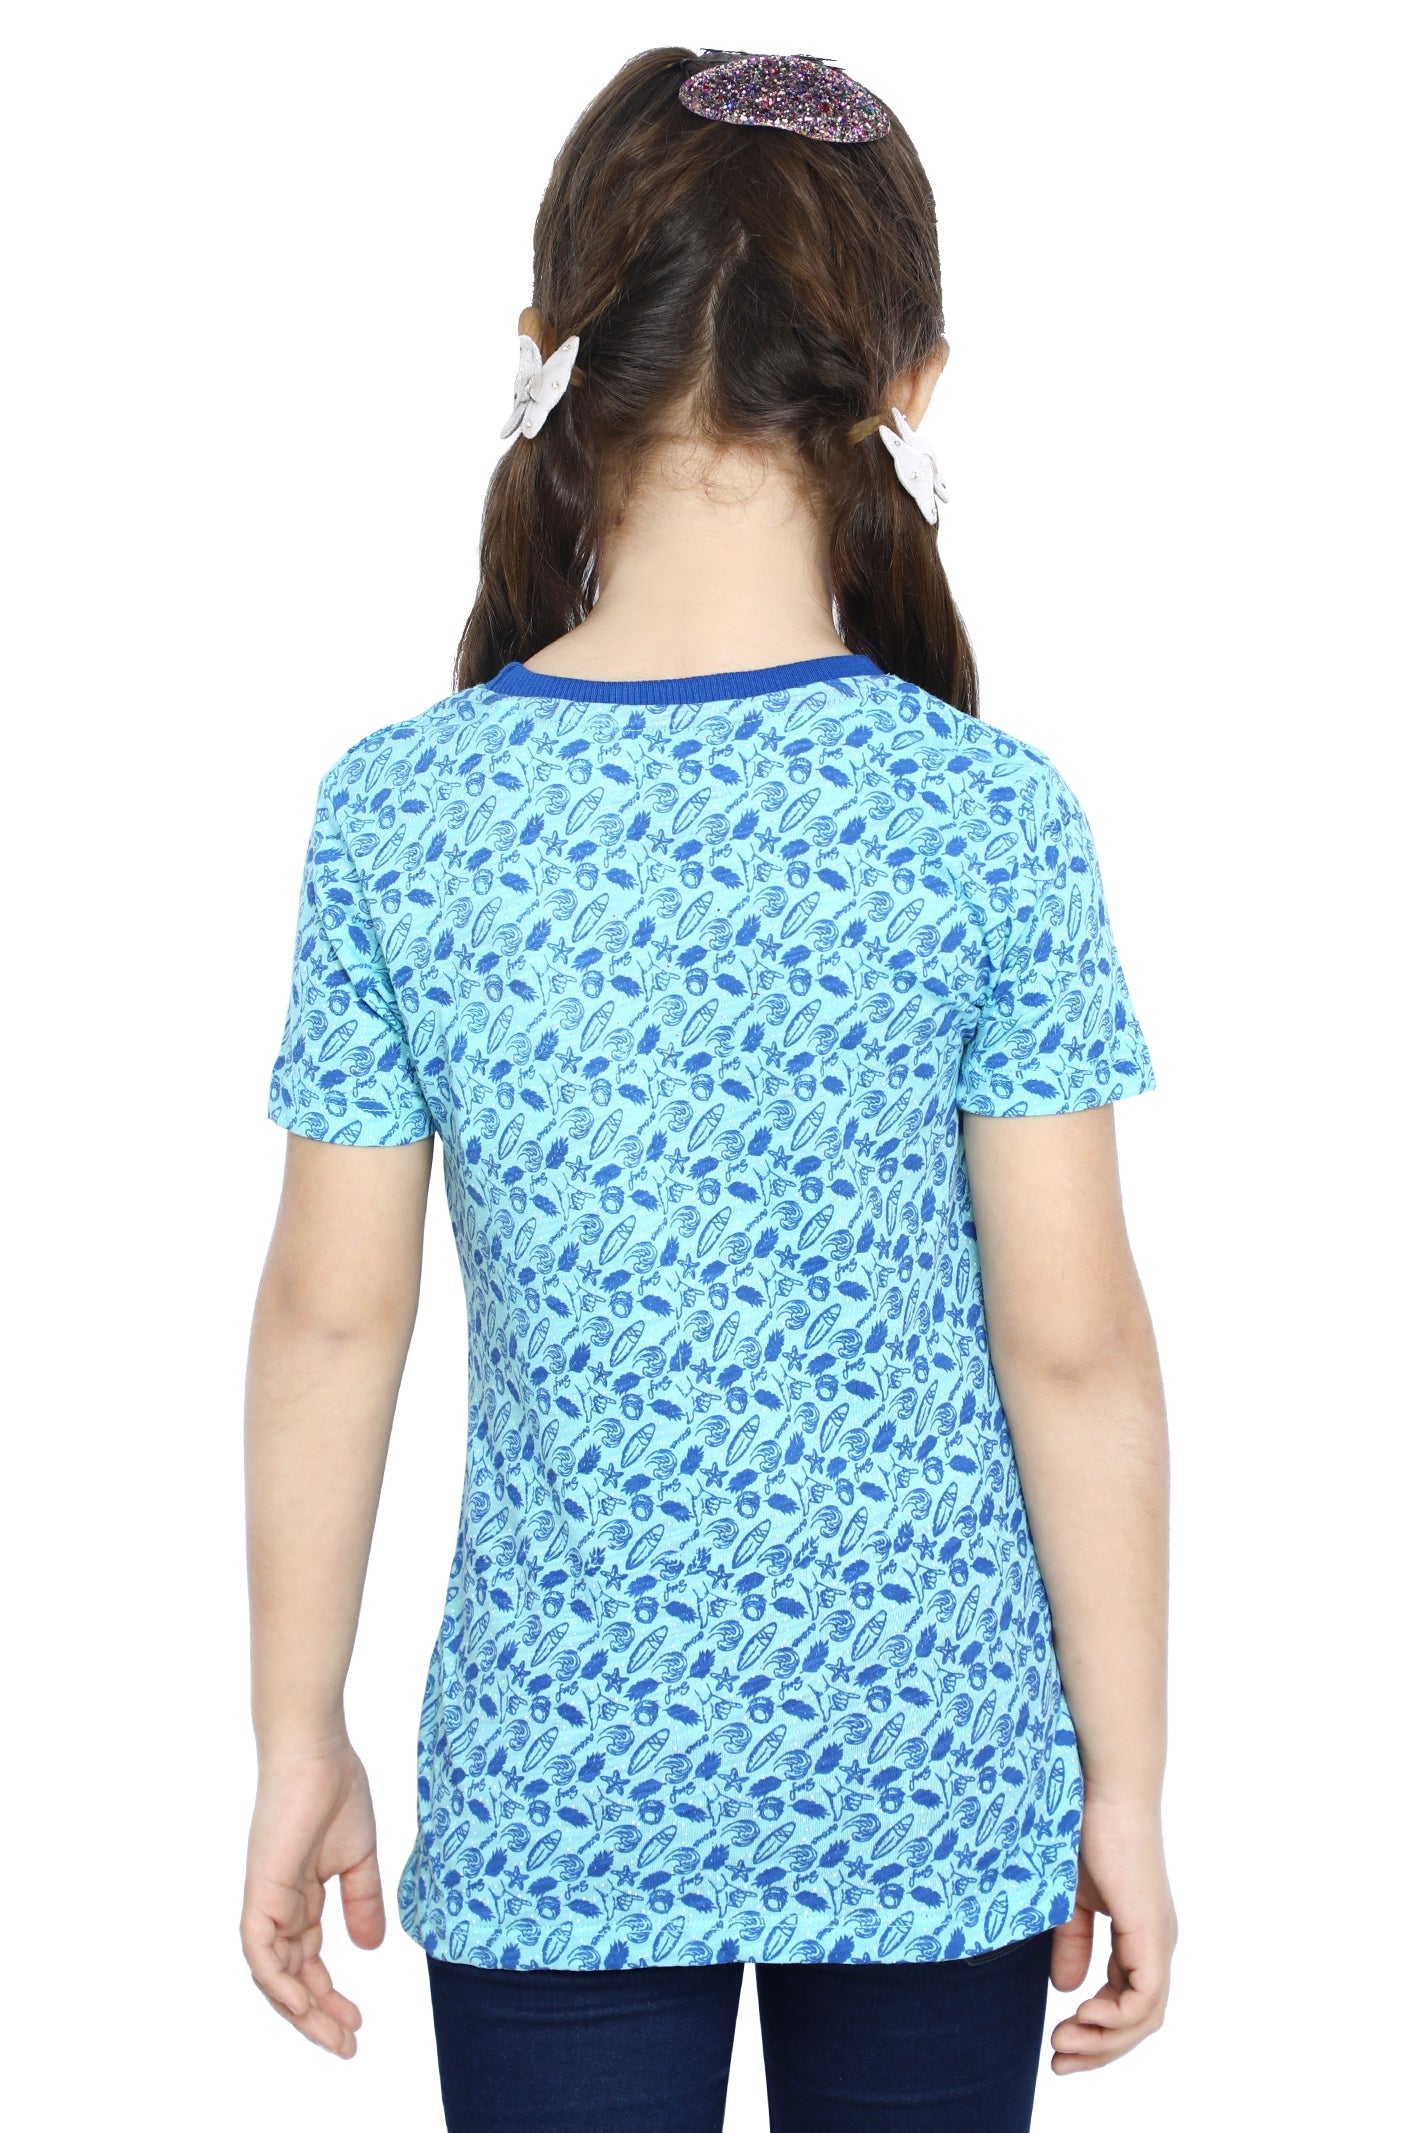 Girls T-Shirt In Blue SKU: KGA-0195-BLUE - Diners